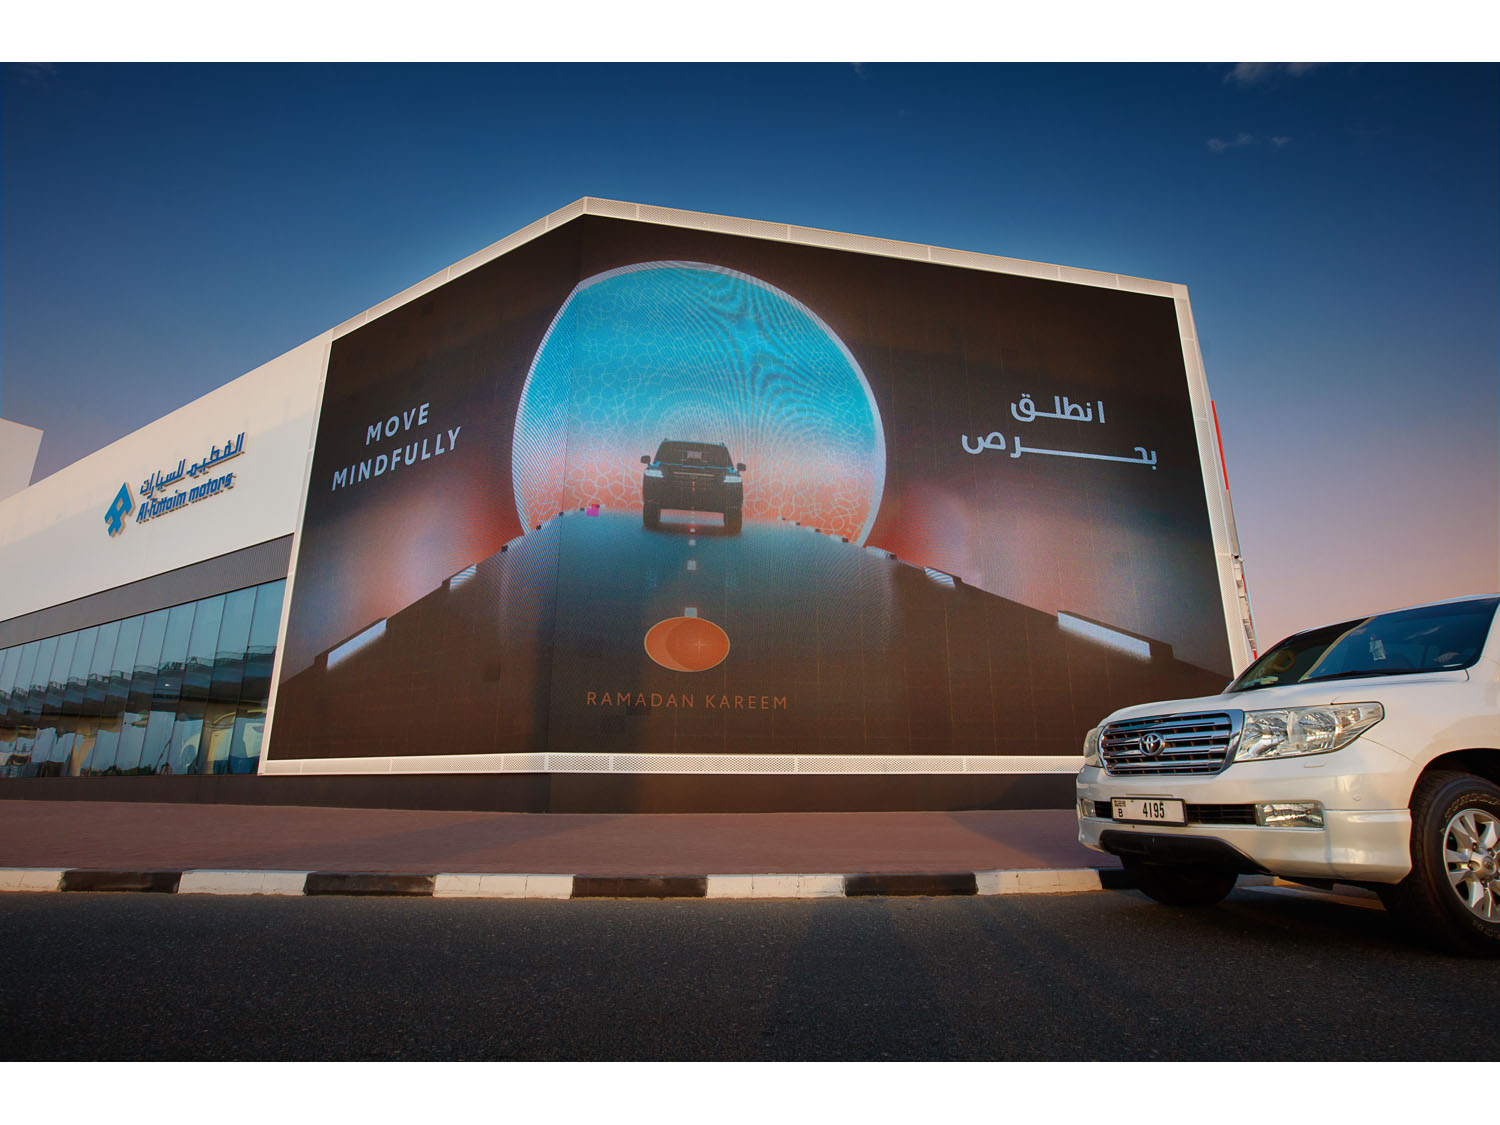 Al-Futtaim Toyota and AKQA tap into Islamic art to turn every drive into a ‘Journey of Mindfulness’ for Ramadan